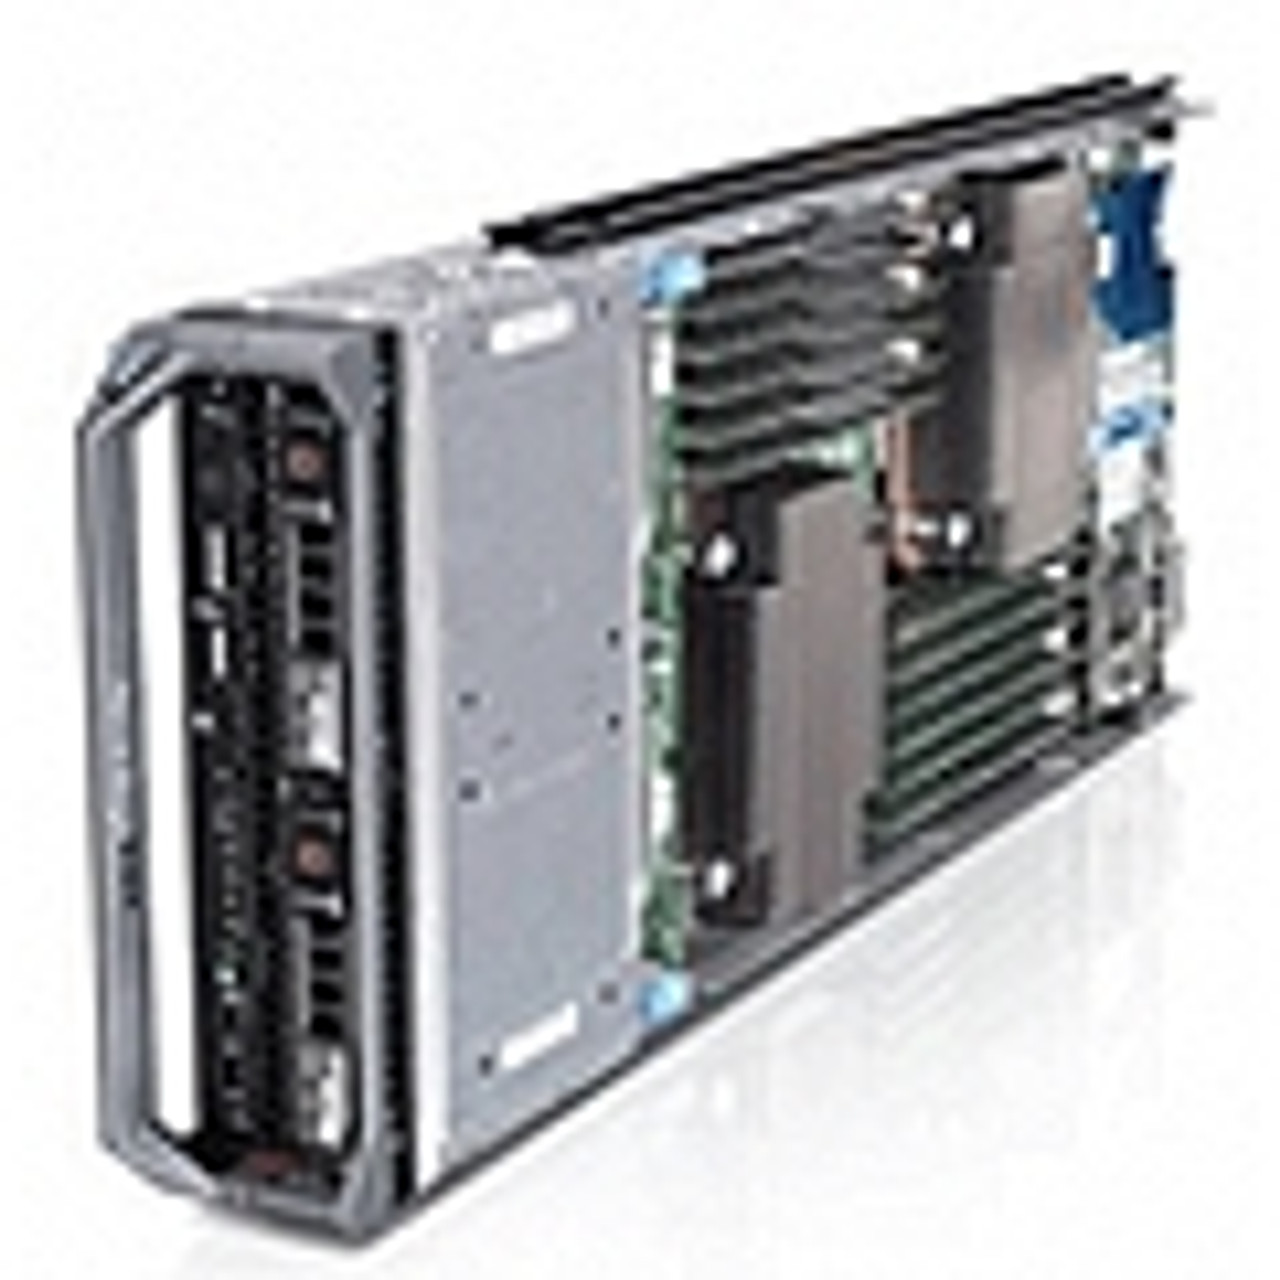 Dell PowerEdge M610 Blade Servers